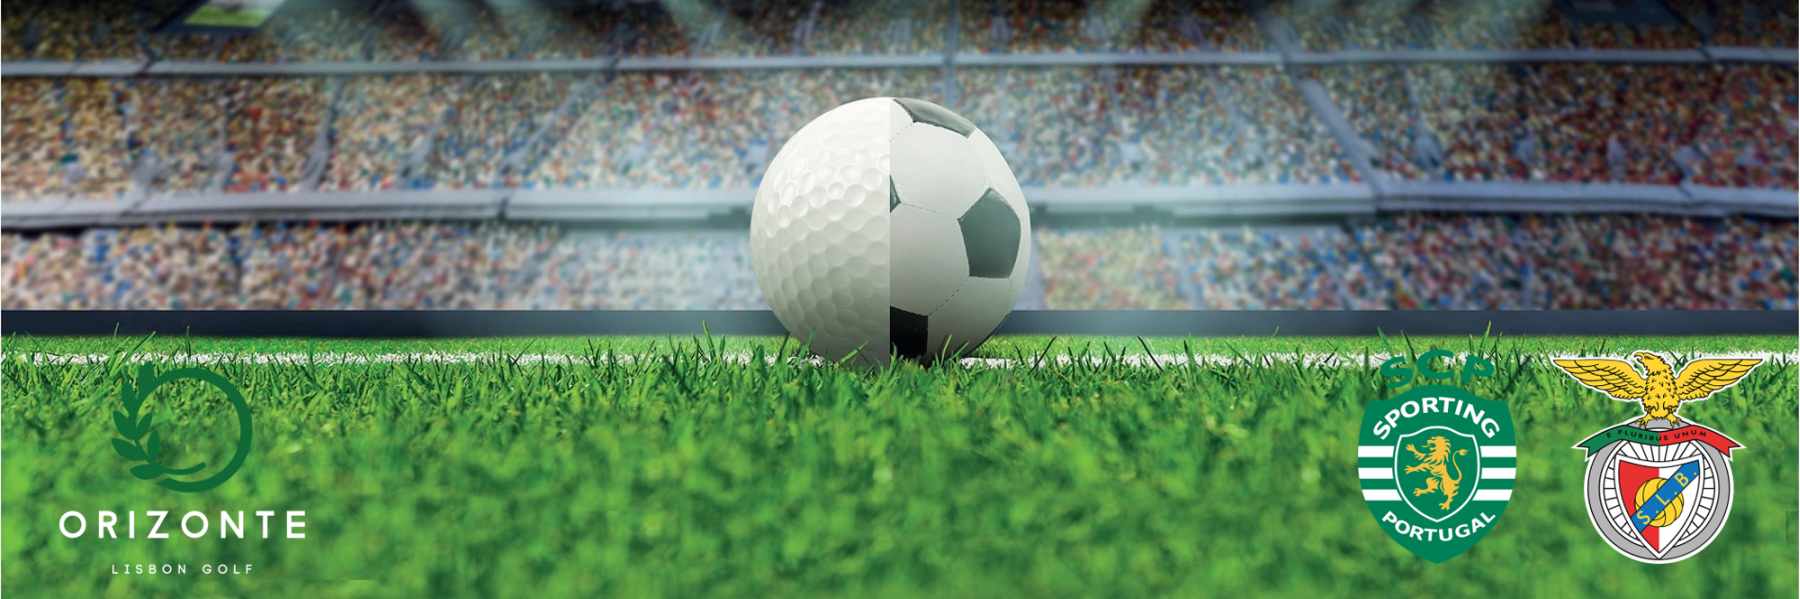 Kombination Golf und Fussball in Lissabon, Benfica gegen Sporting